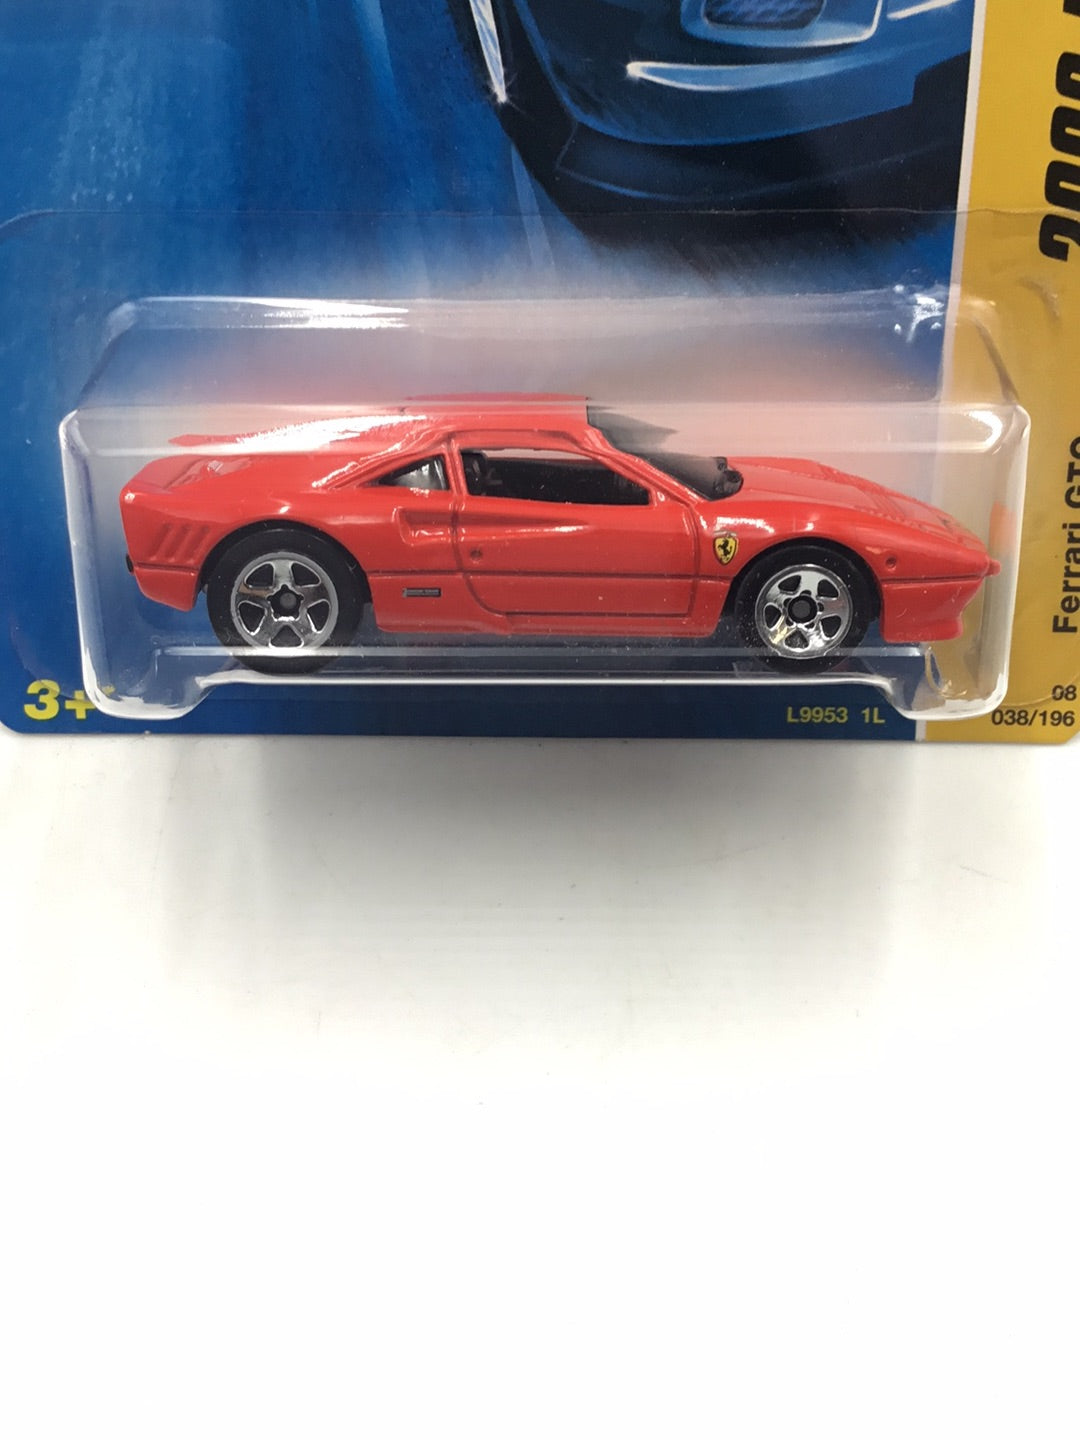 2008 Hot wheels #38 GTO Ferrari red